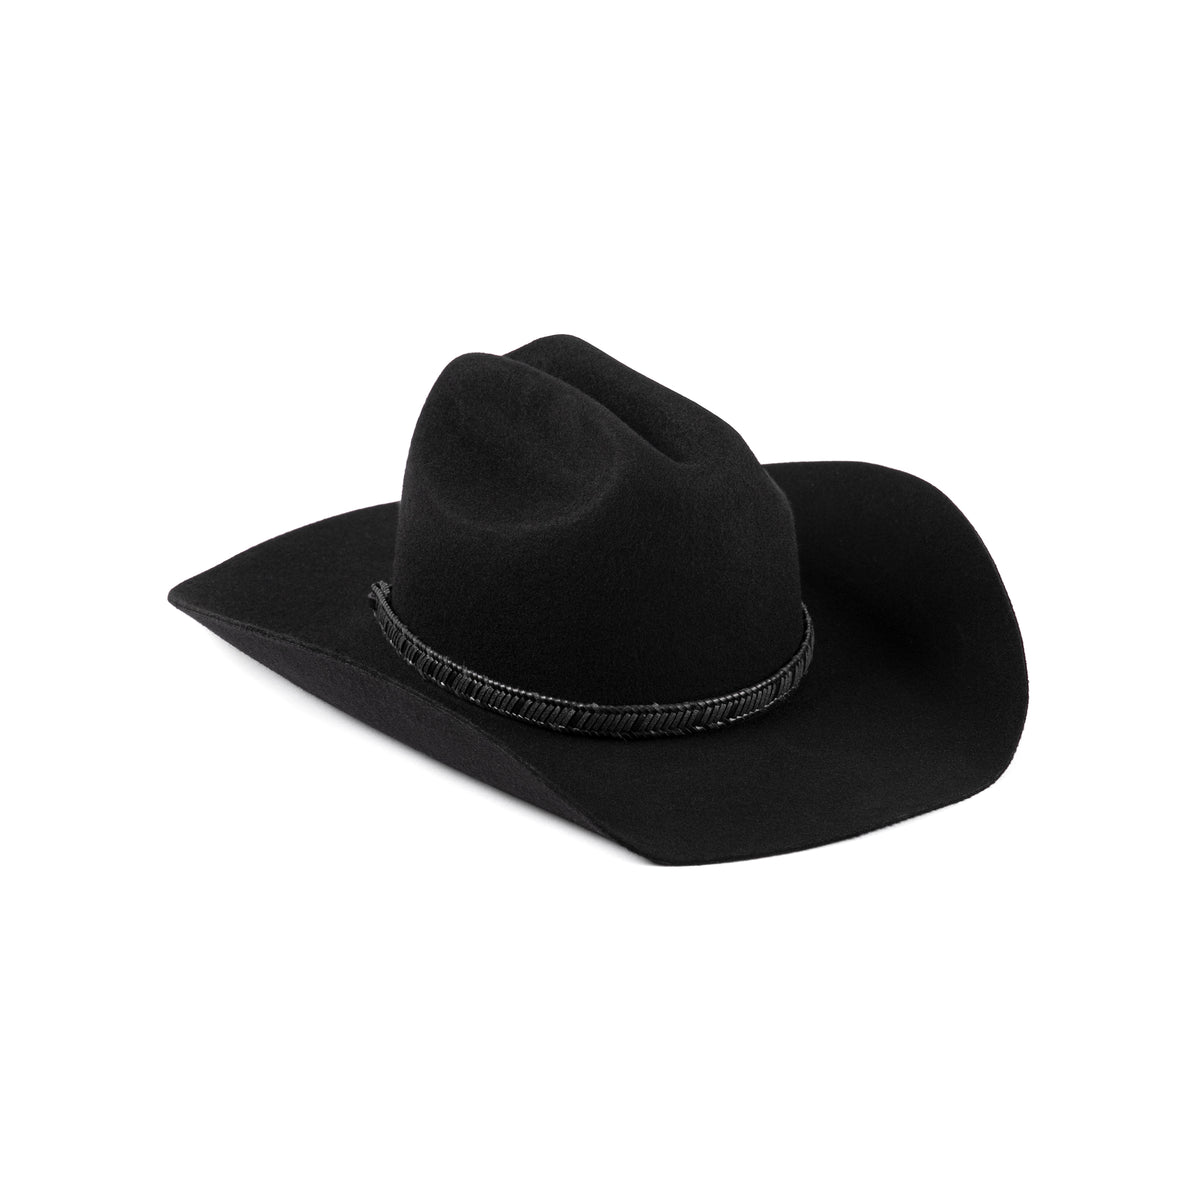 The Ridge - Wool Felt Cowboy Hat in Black | Lack of Color